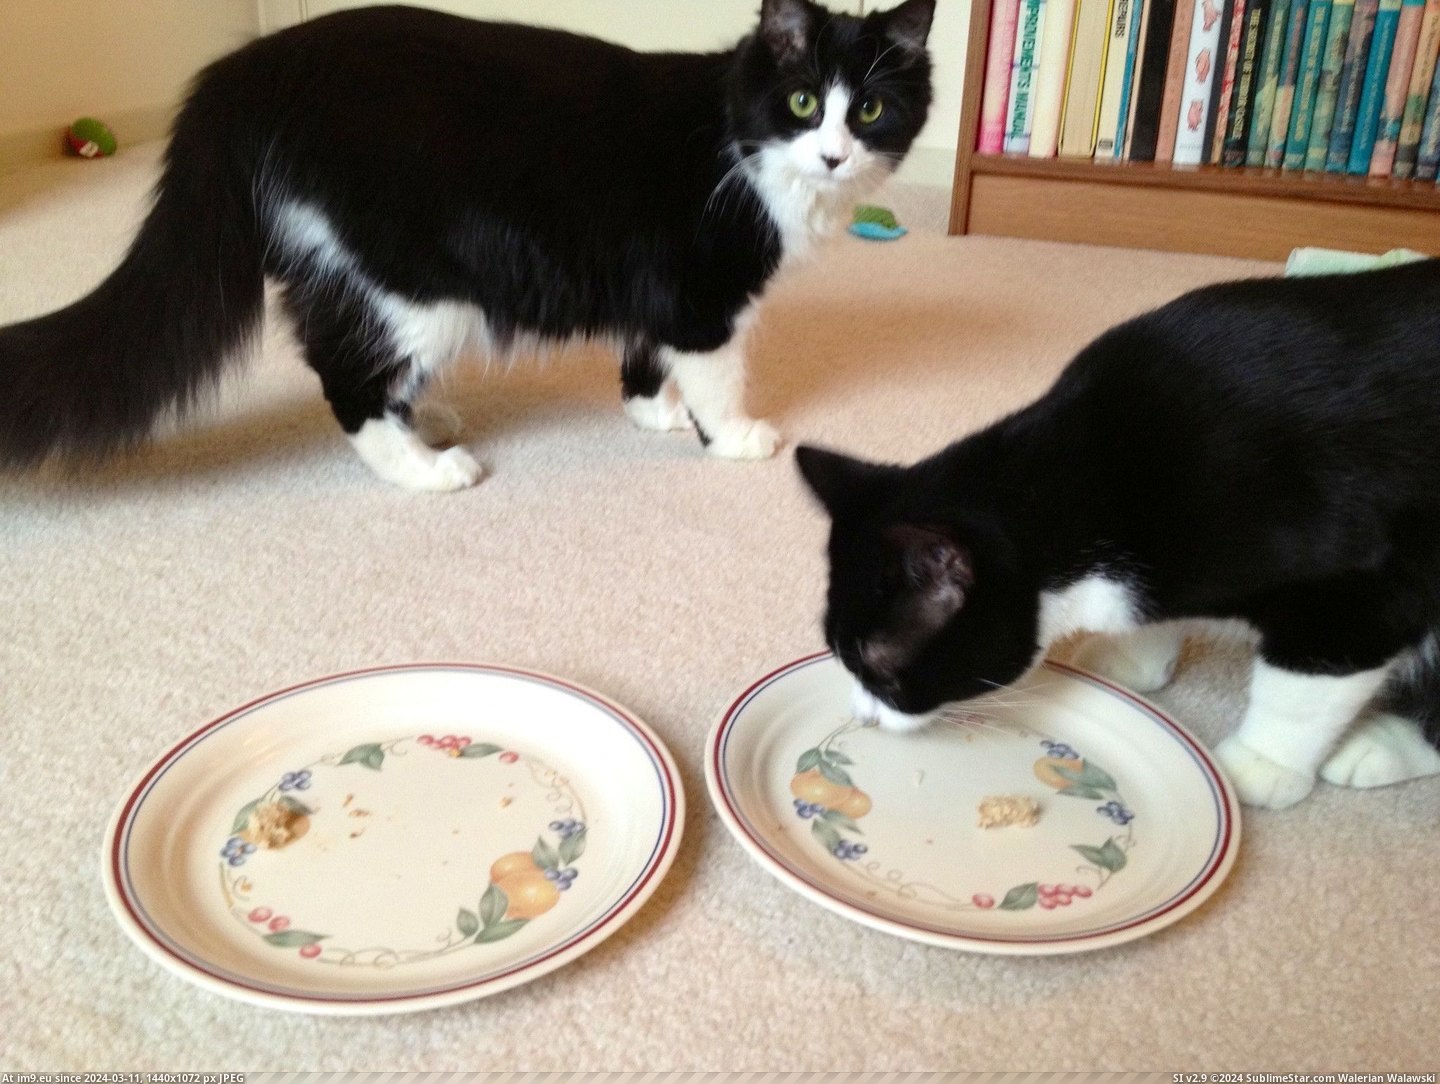 #Cats #Two #Happy #Feast #Catsgiving #Enjoying #Thanksgiving #Kitties [Cats] Just two kitties enjoying a Catsgiving feast. Happy Thanksgiving everyone! 2 Pic. (Изображение из альбом My r/CATS favs))